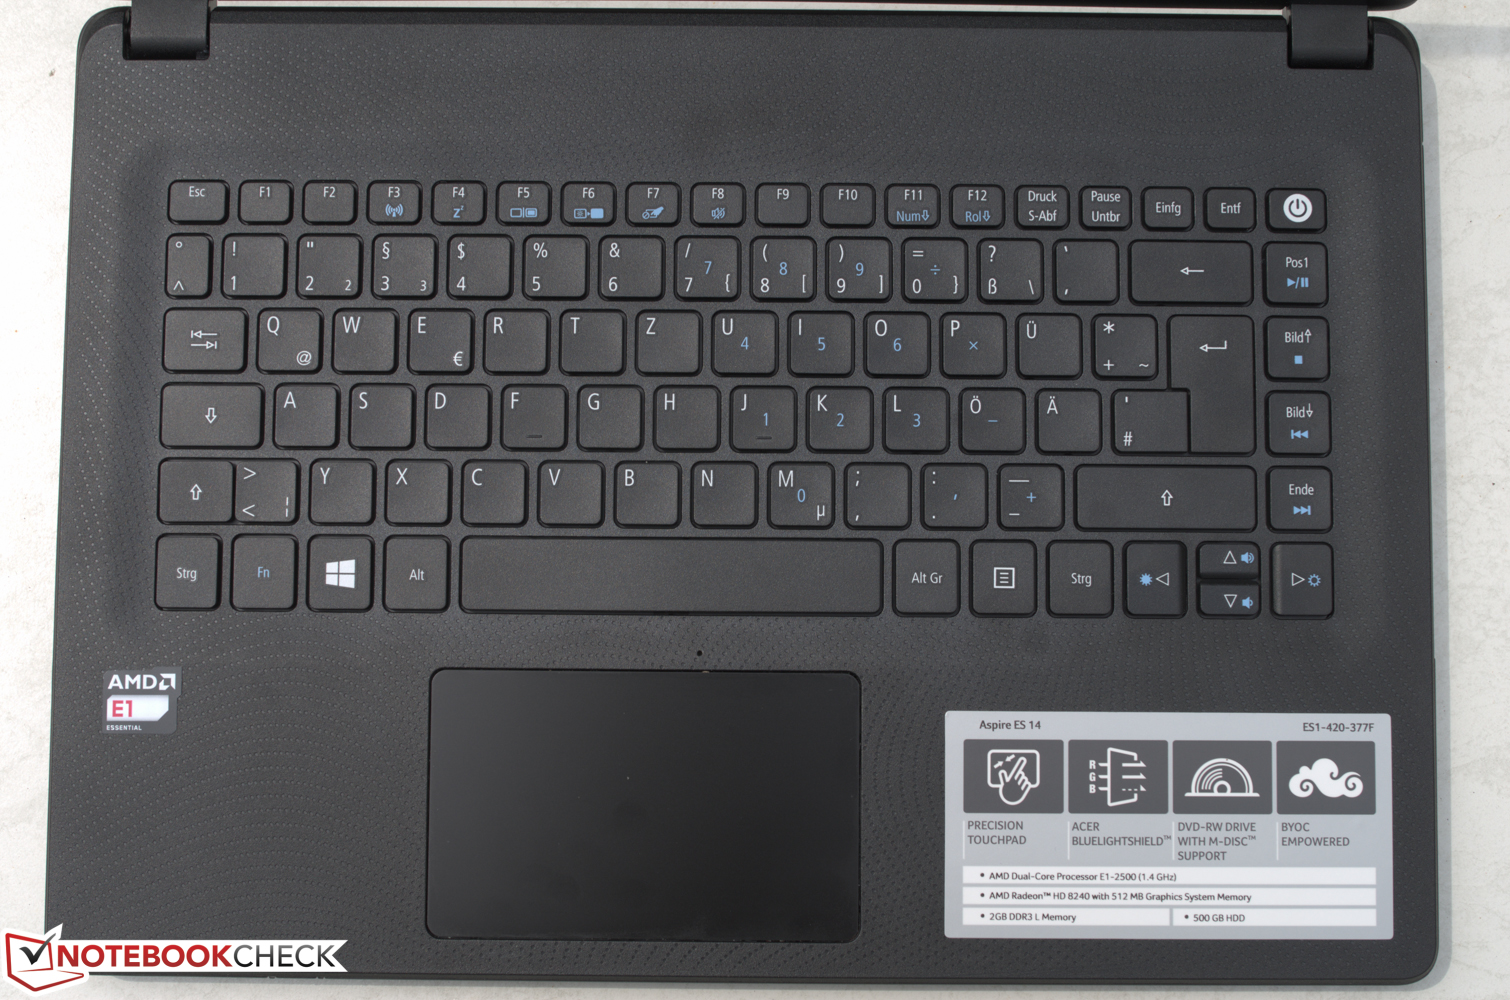 Acer Aspire Es1 420 Notebook Review Notebookcheck Net Reviews